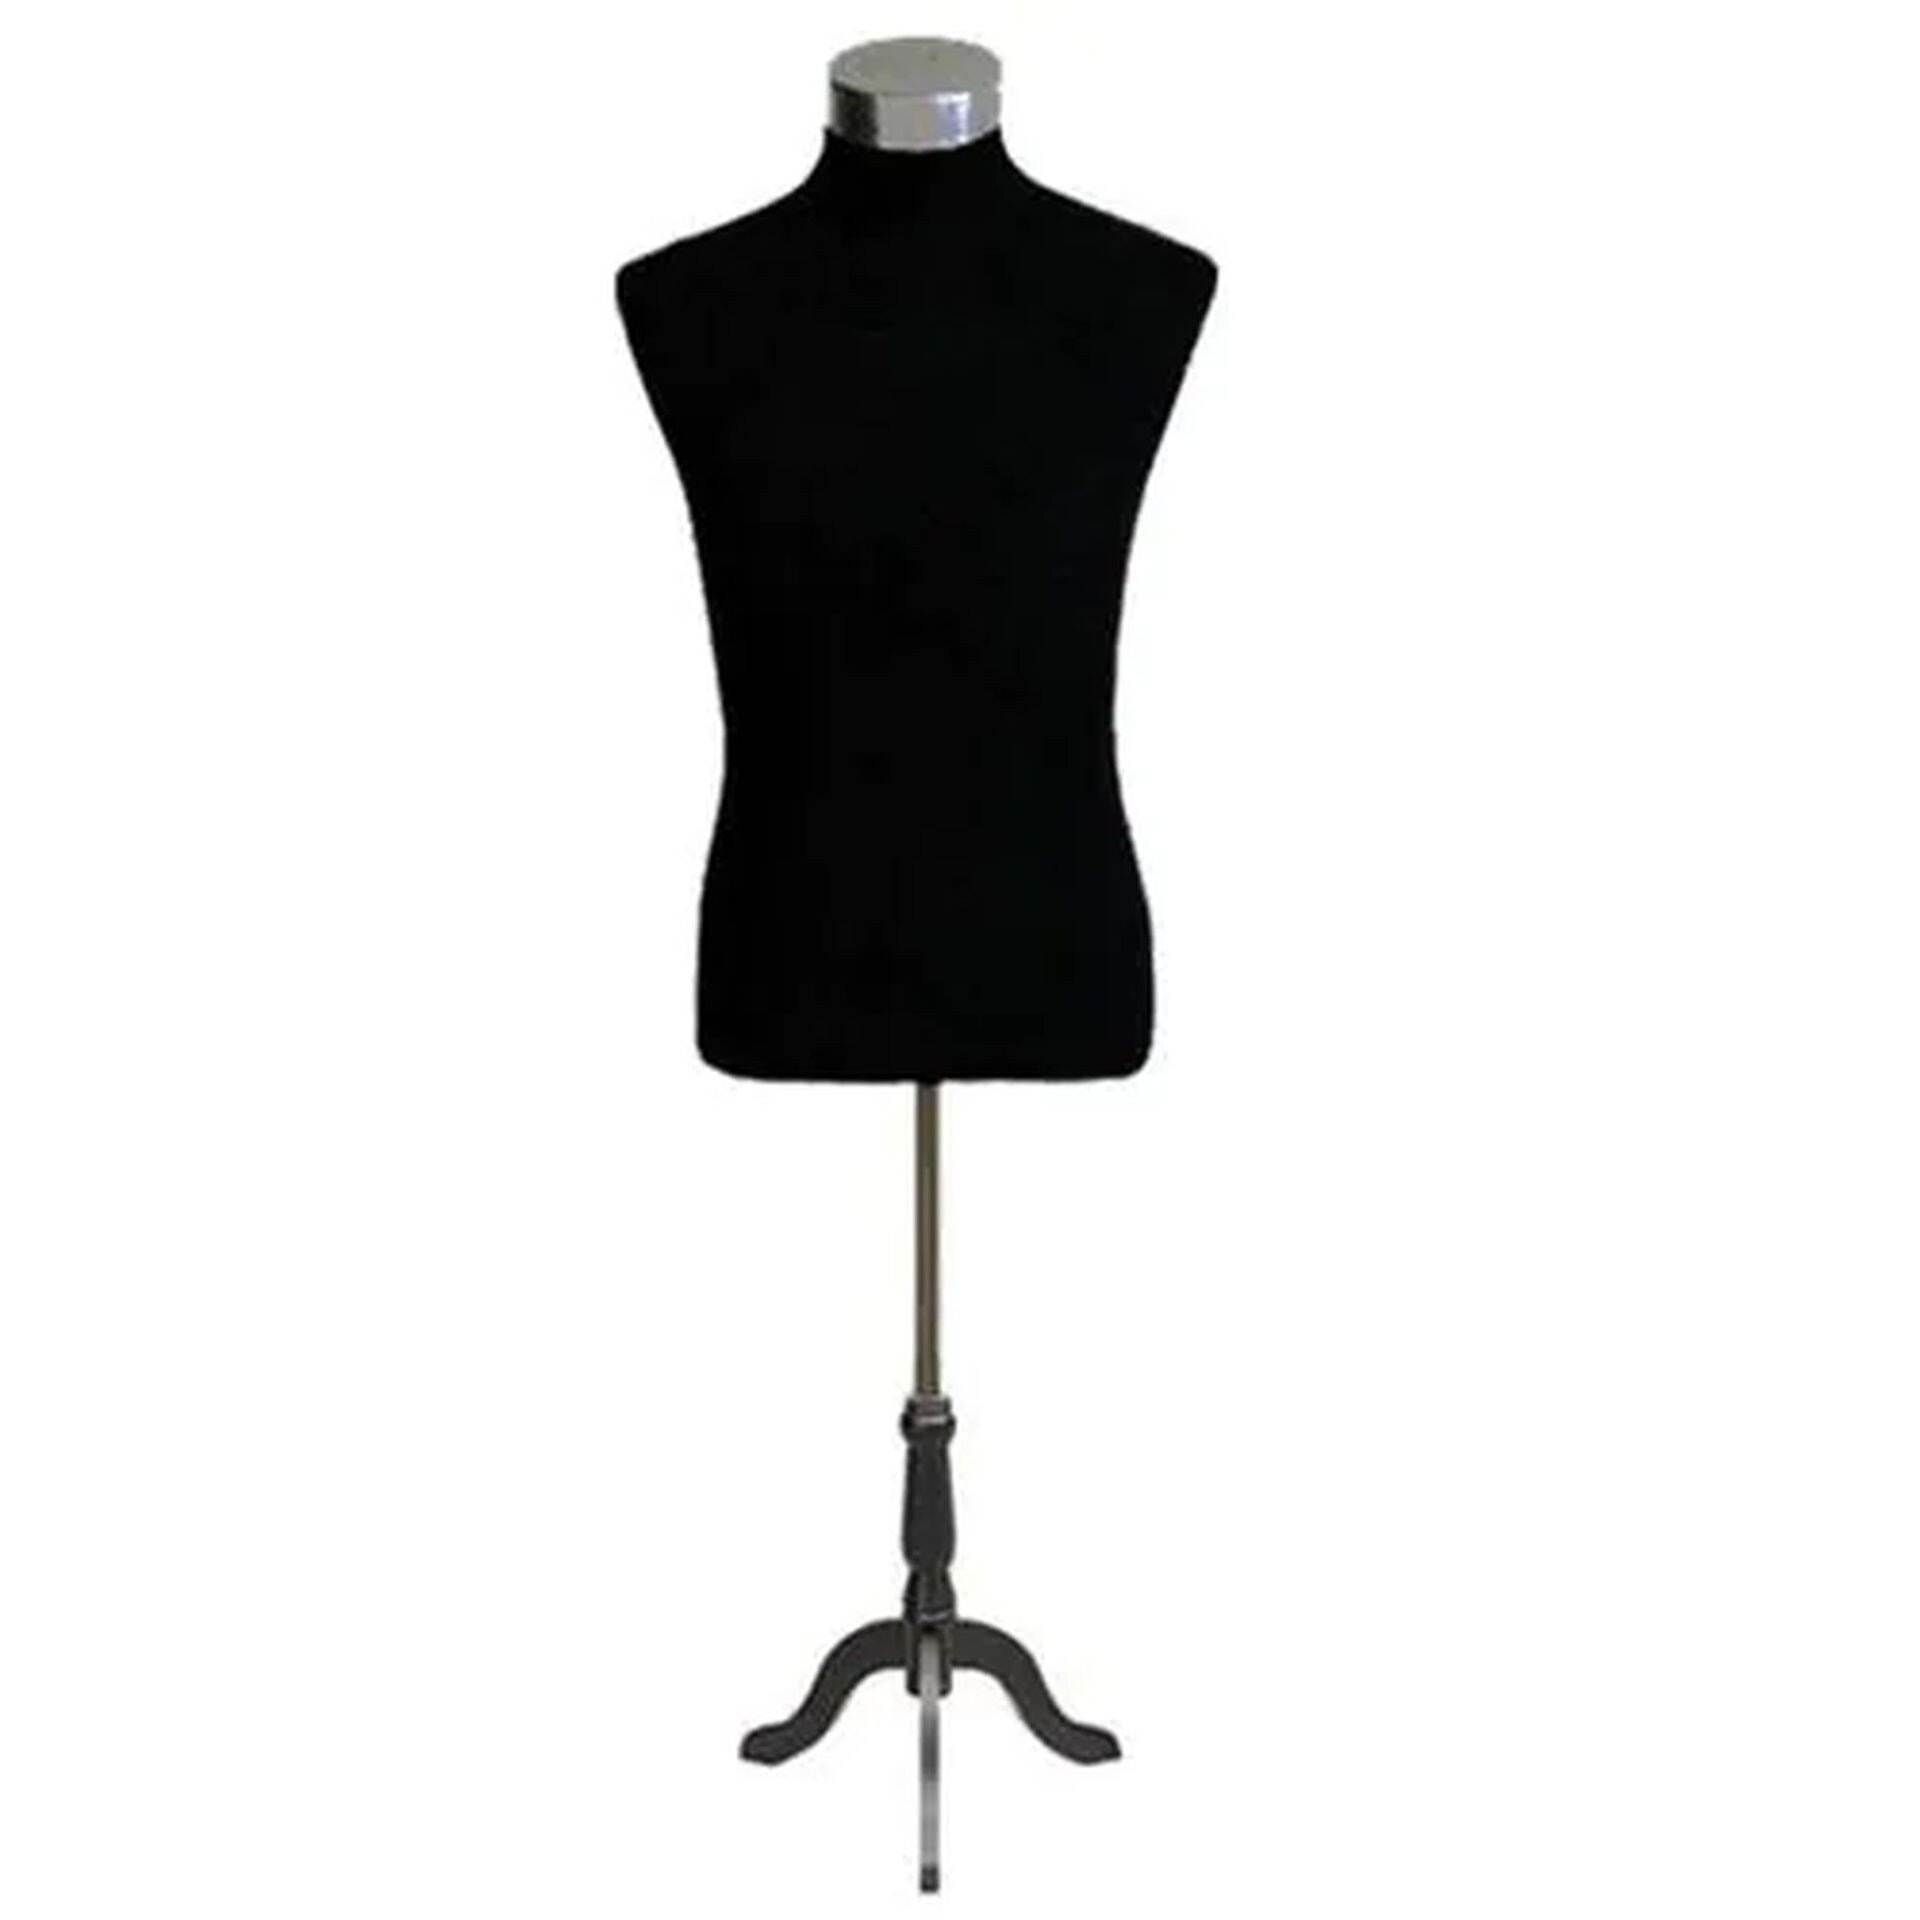 Shop SMART Smart Male Half Body Display Mannequin, Black | Dragonmart ...